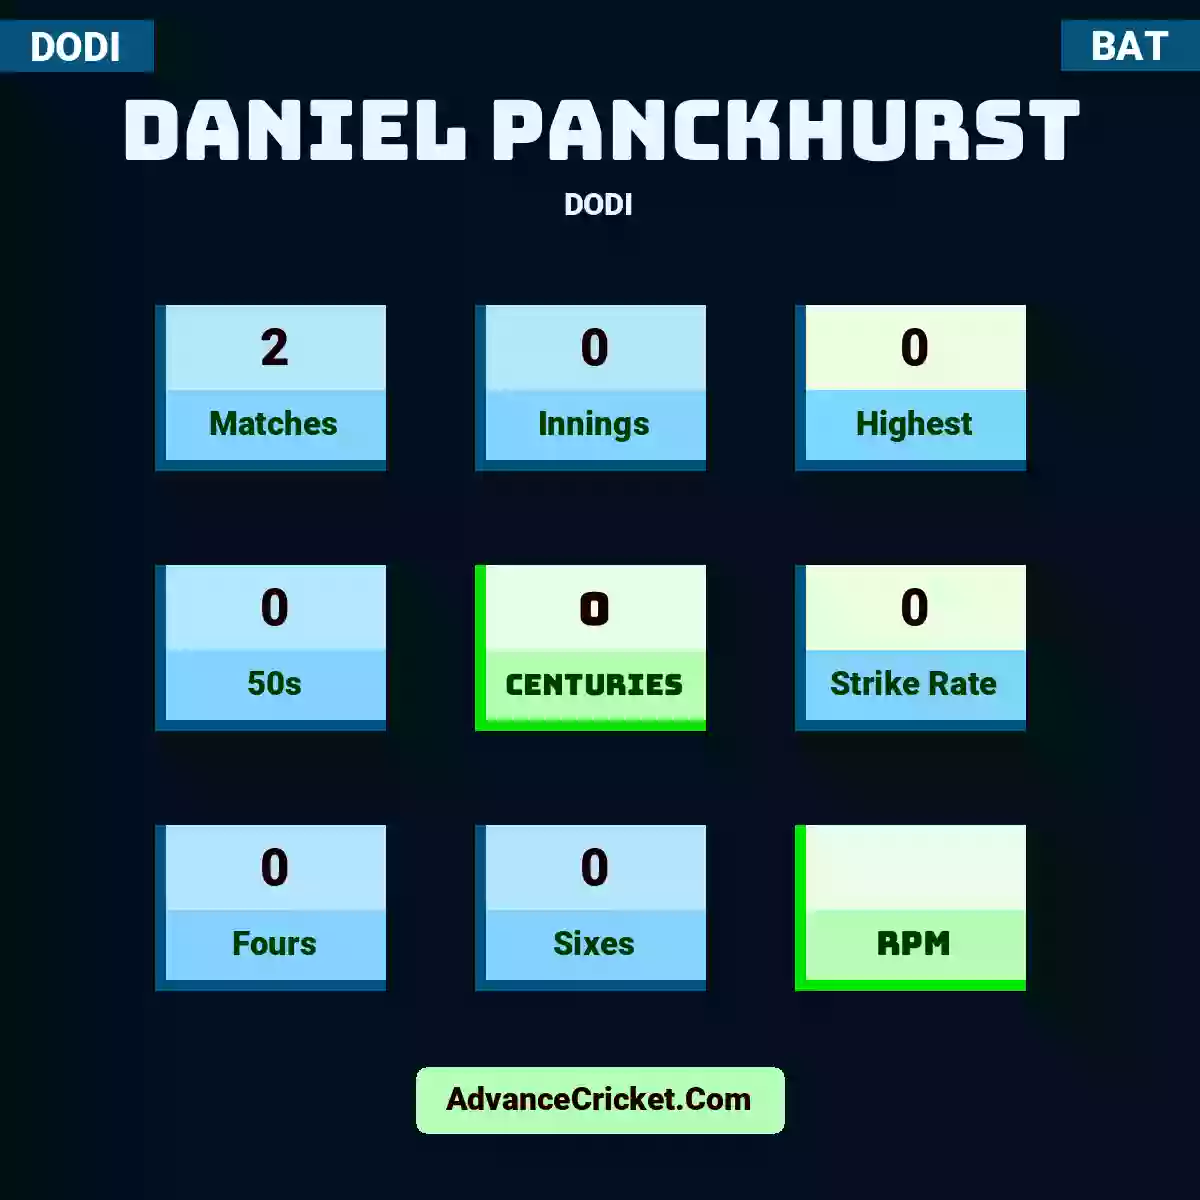 Daniel Panckhurst DODI , Daniel Panckhurst played 2 matches, scored 0 runs as highest, 0 half-centuries, and 0 centuries, with a strike rate of 0. D.Panckhurst hit 0 fours and 0 sixes.